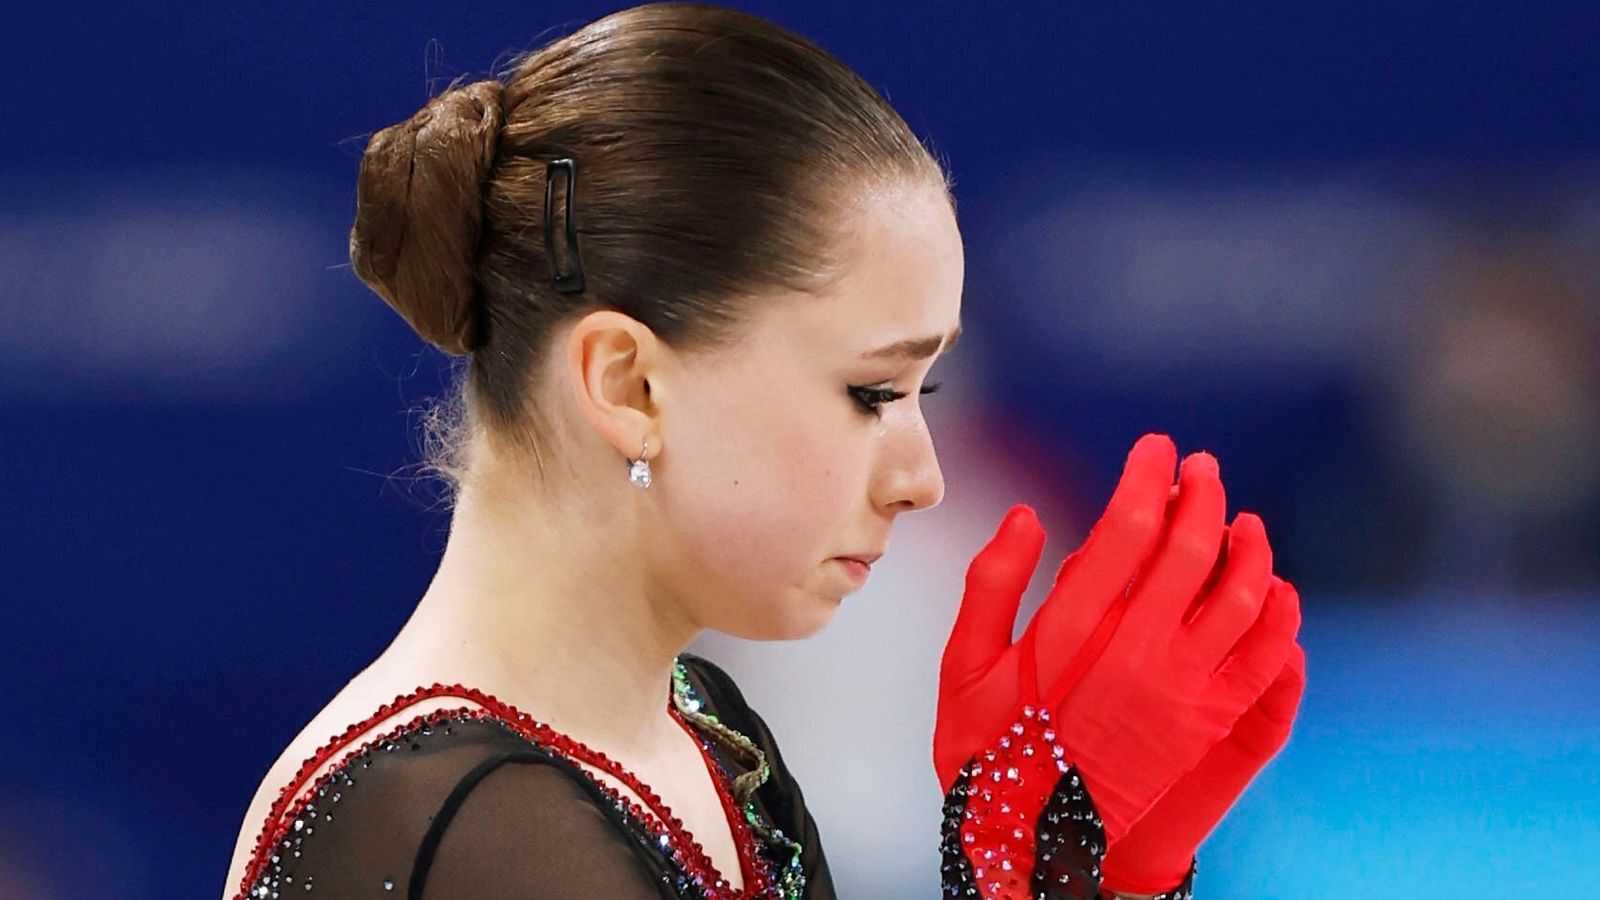 Kamila Valieva: IOC president Thomas Bach hits out at ‘chilling’ attitude from figure skater’s entourage